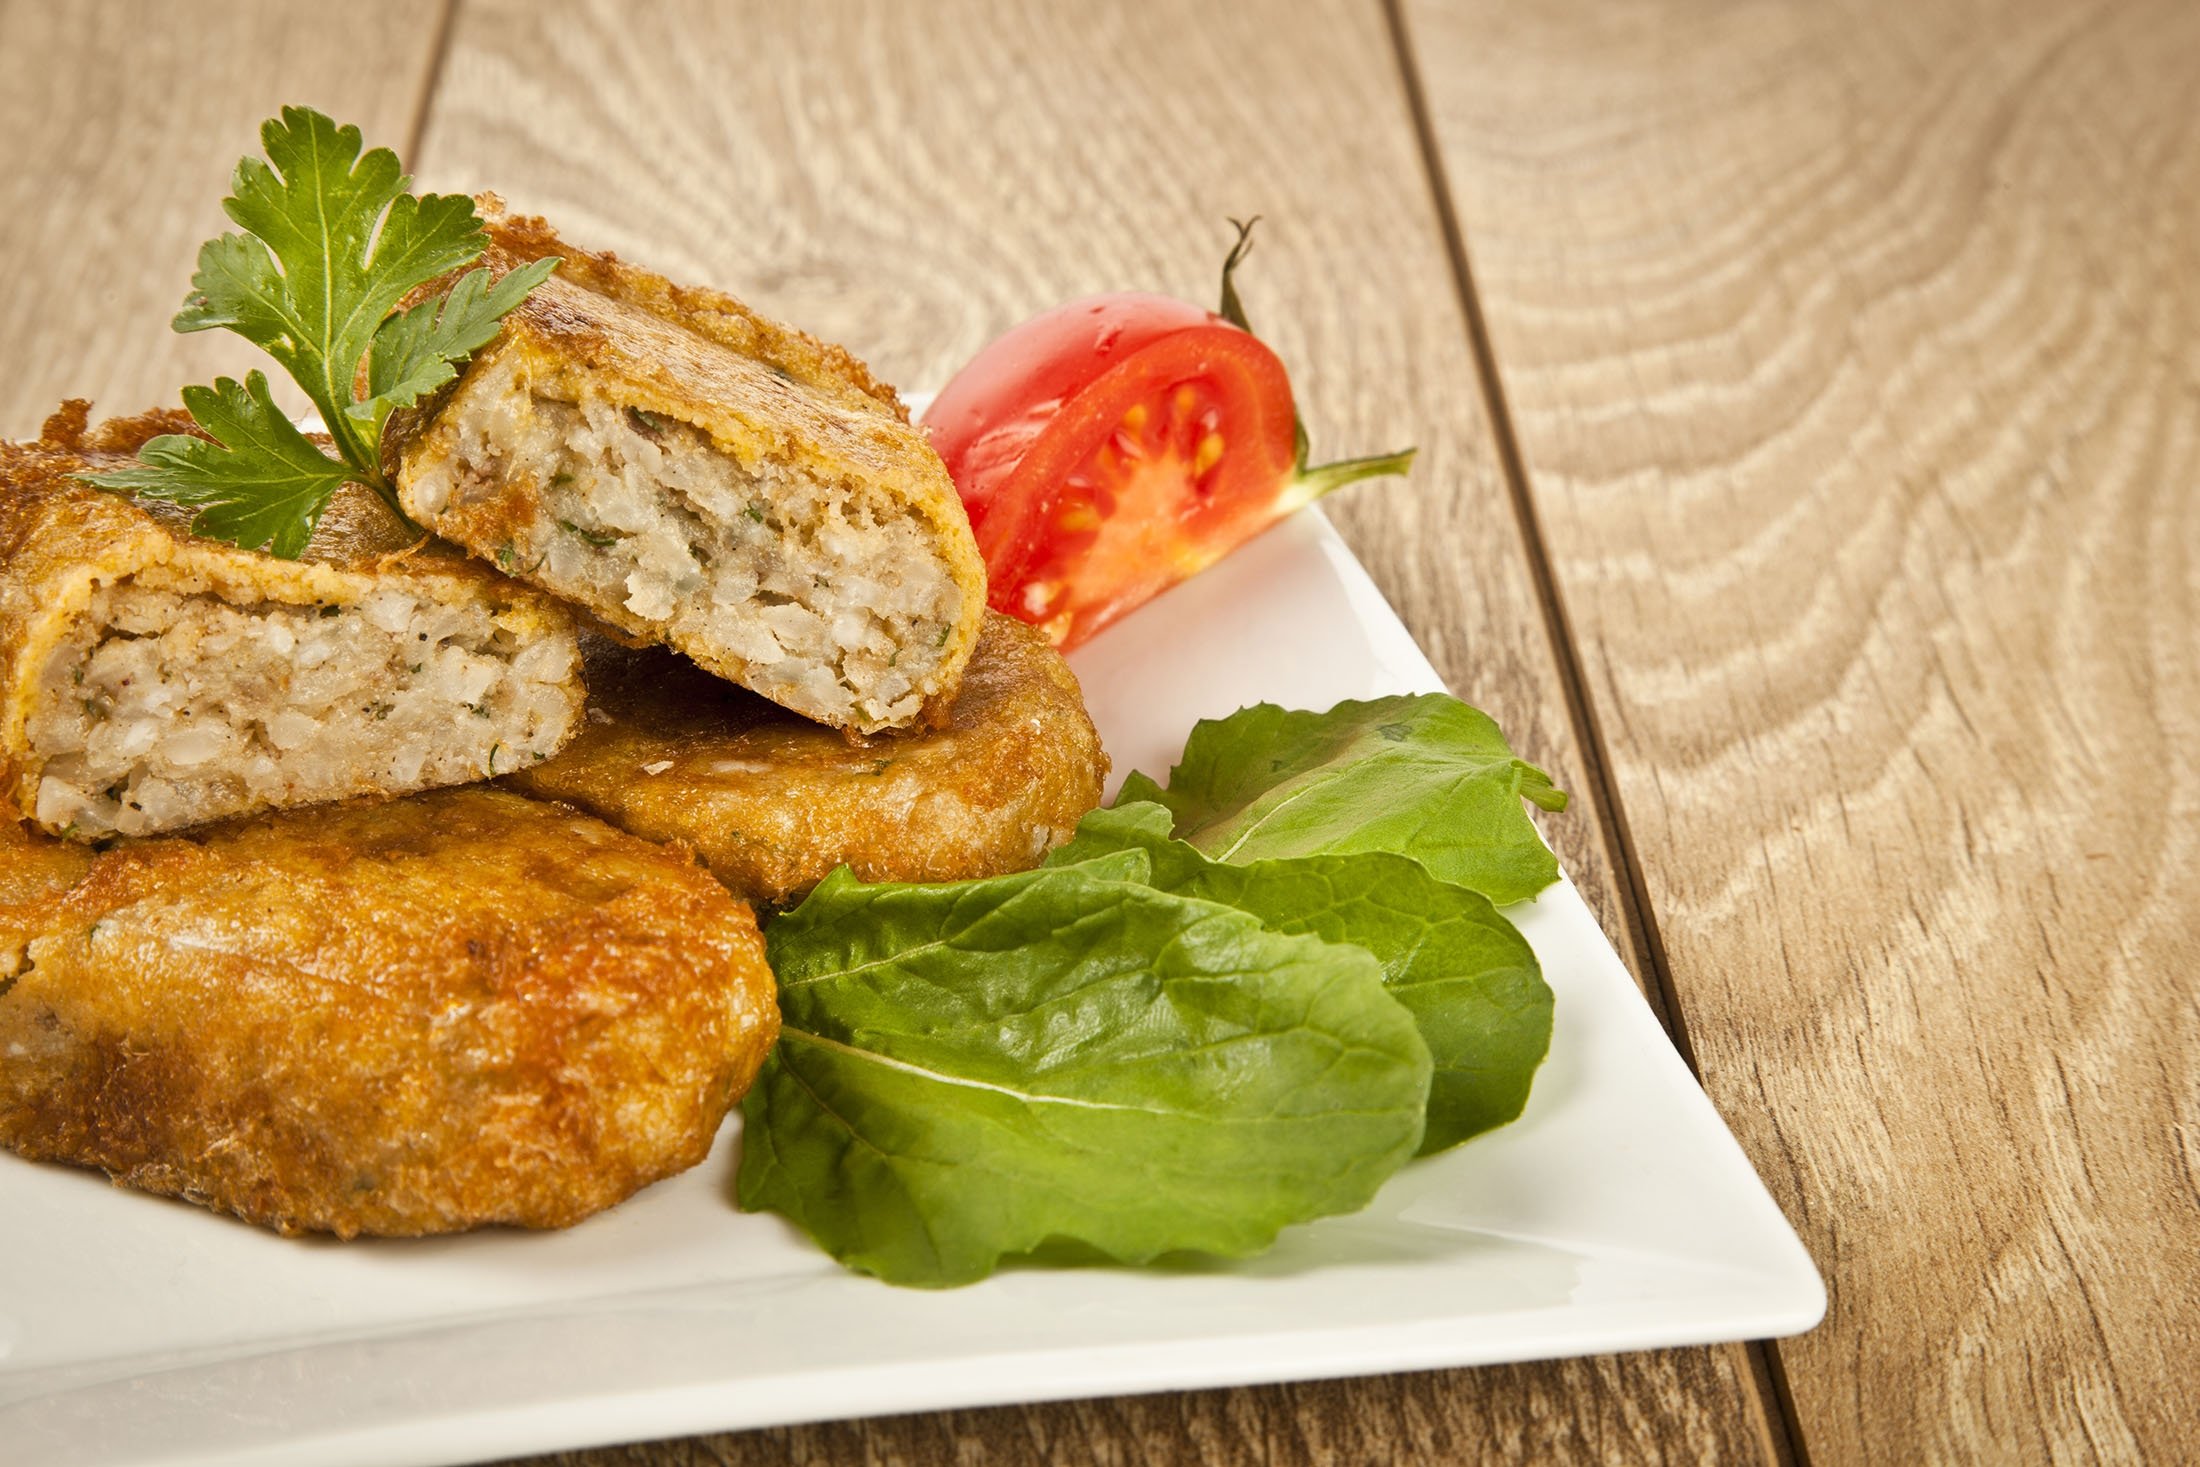 Kadınbudu köfte is a recipe that has withstood hundreds of years. (Shutterstock Photo)